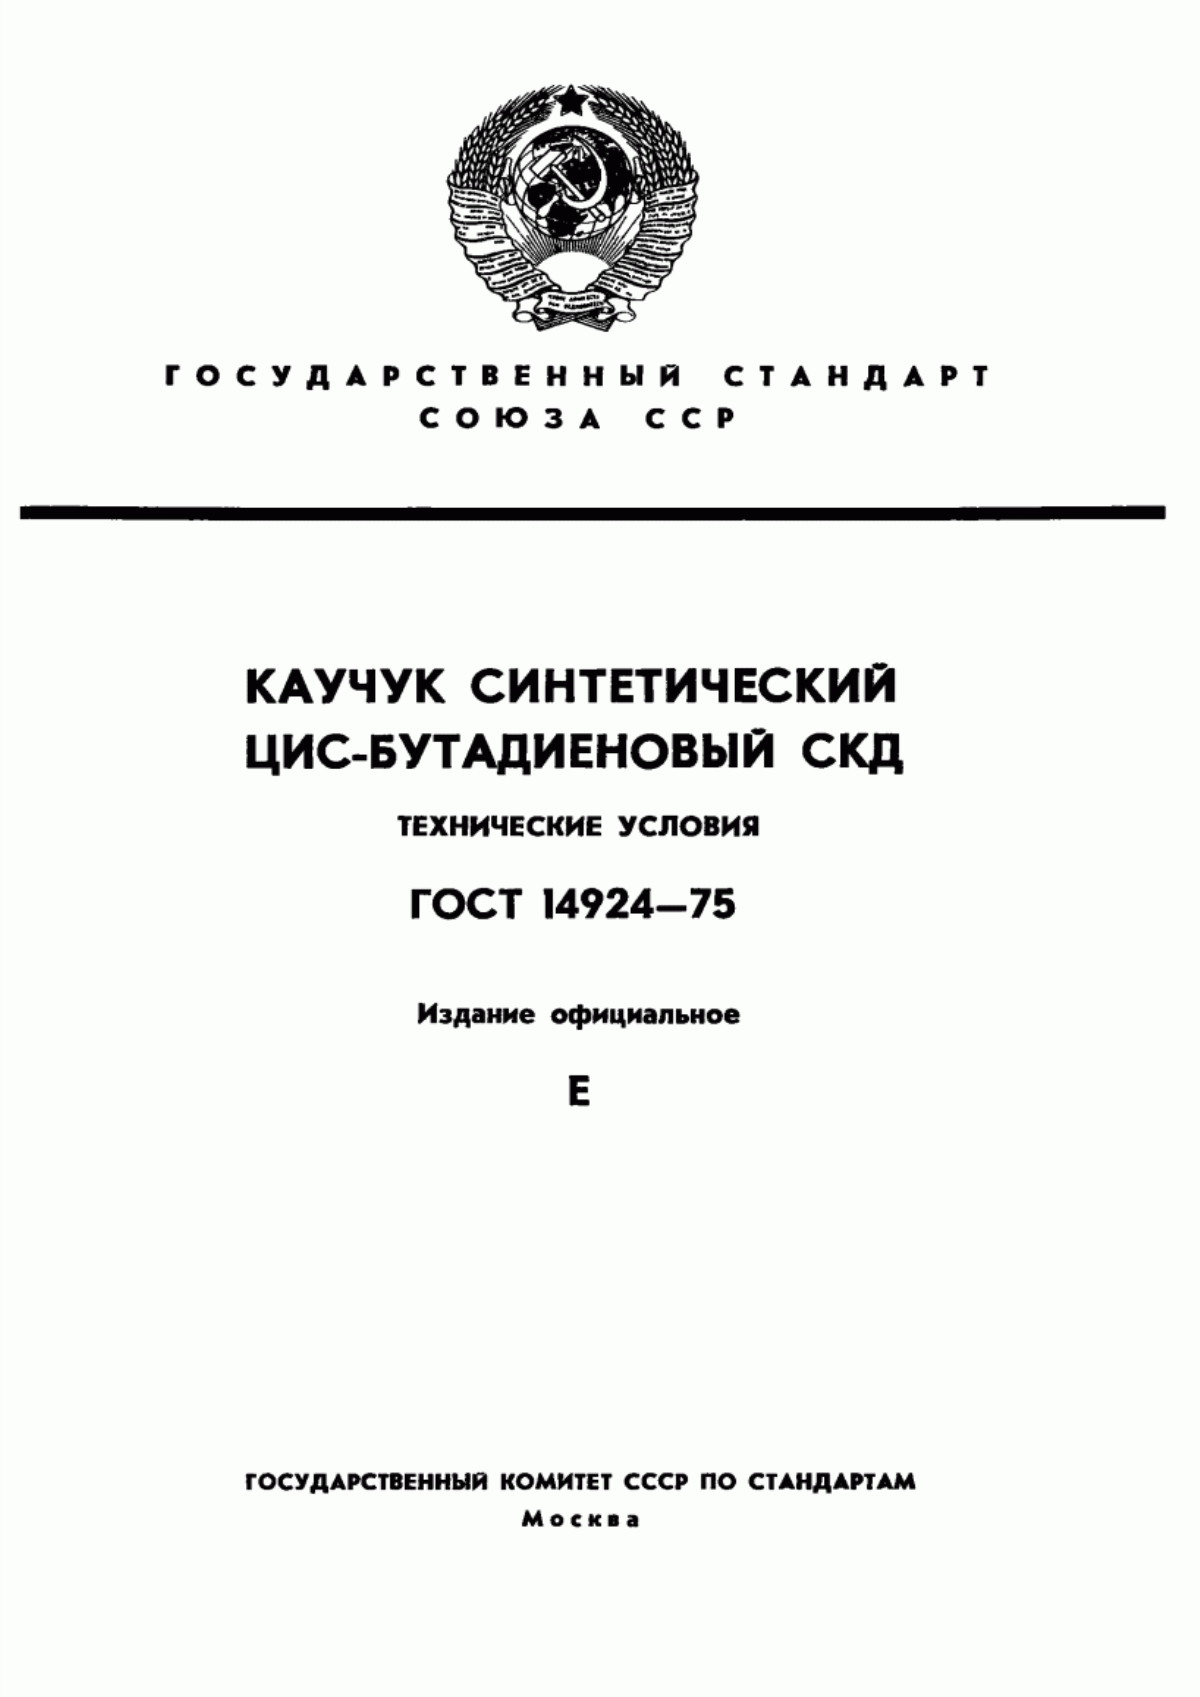 ГОСТ 14924-75 Каучук синтетический цис-бутадиеновый СКД. Технические условия